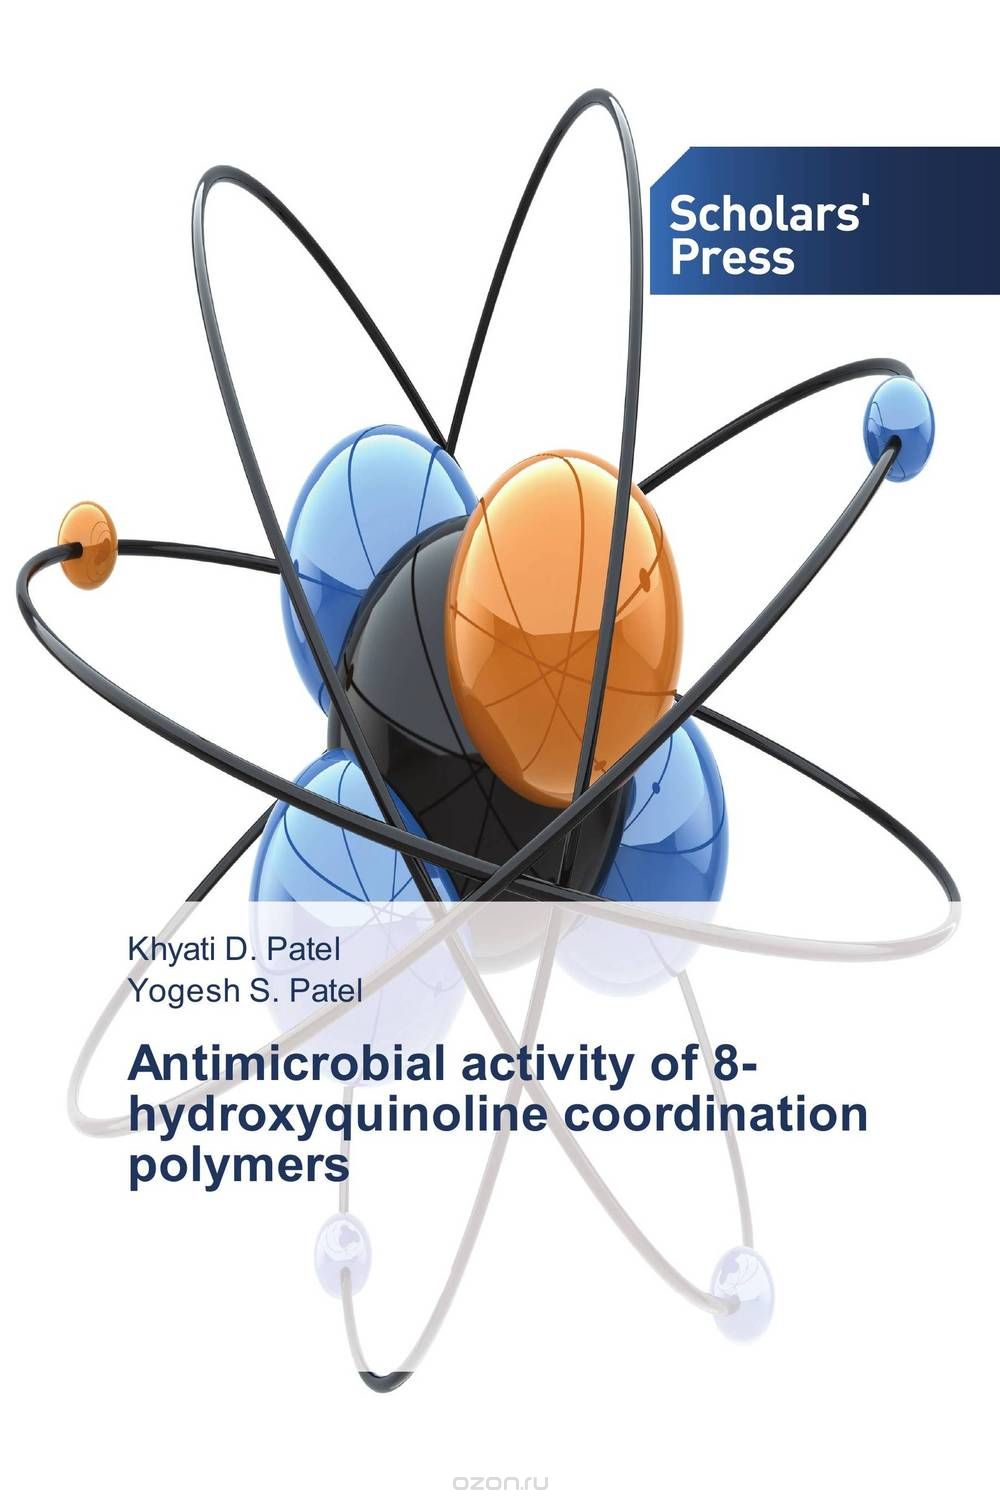 Скачать книгу "Antimicrobial activity of 8-hydroxyquinoline coordination polymers"